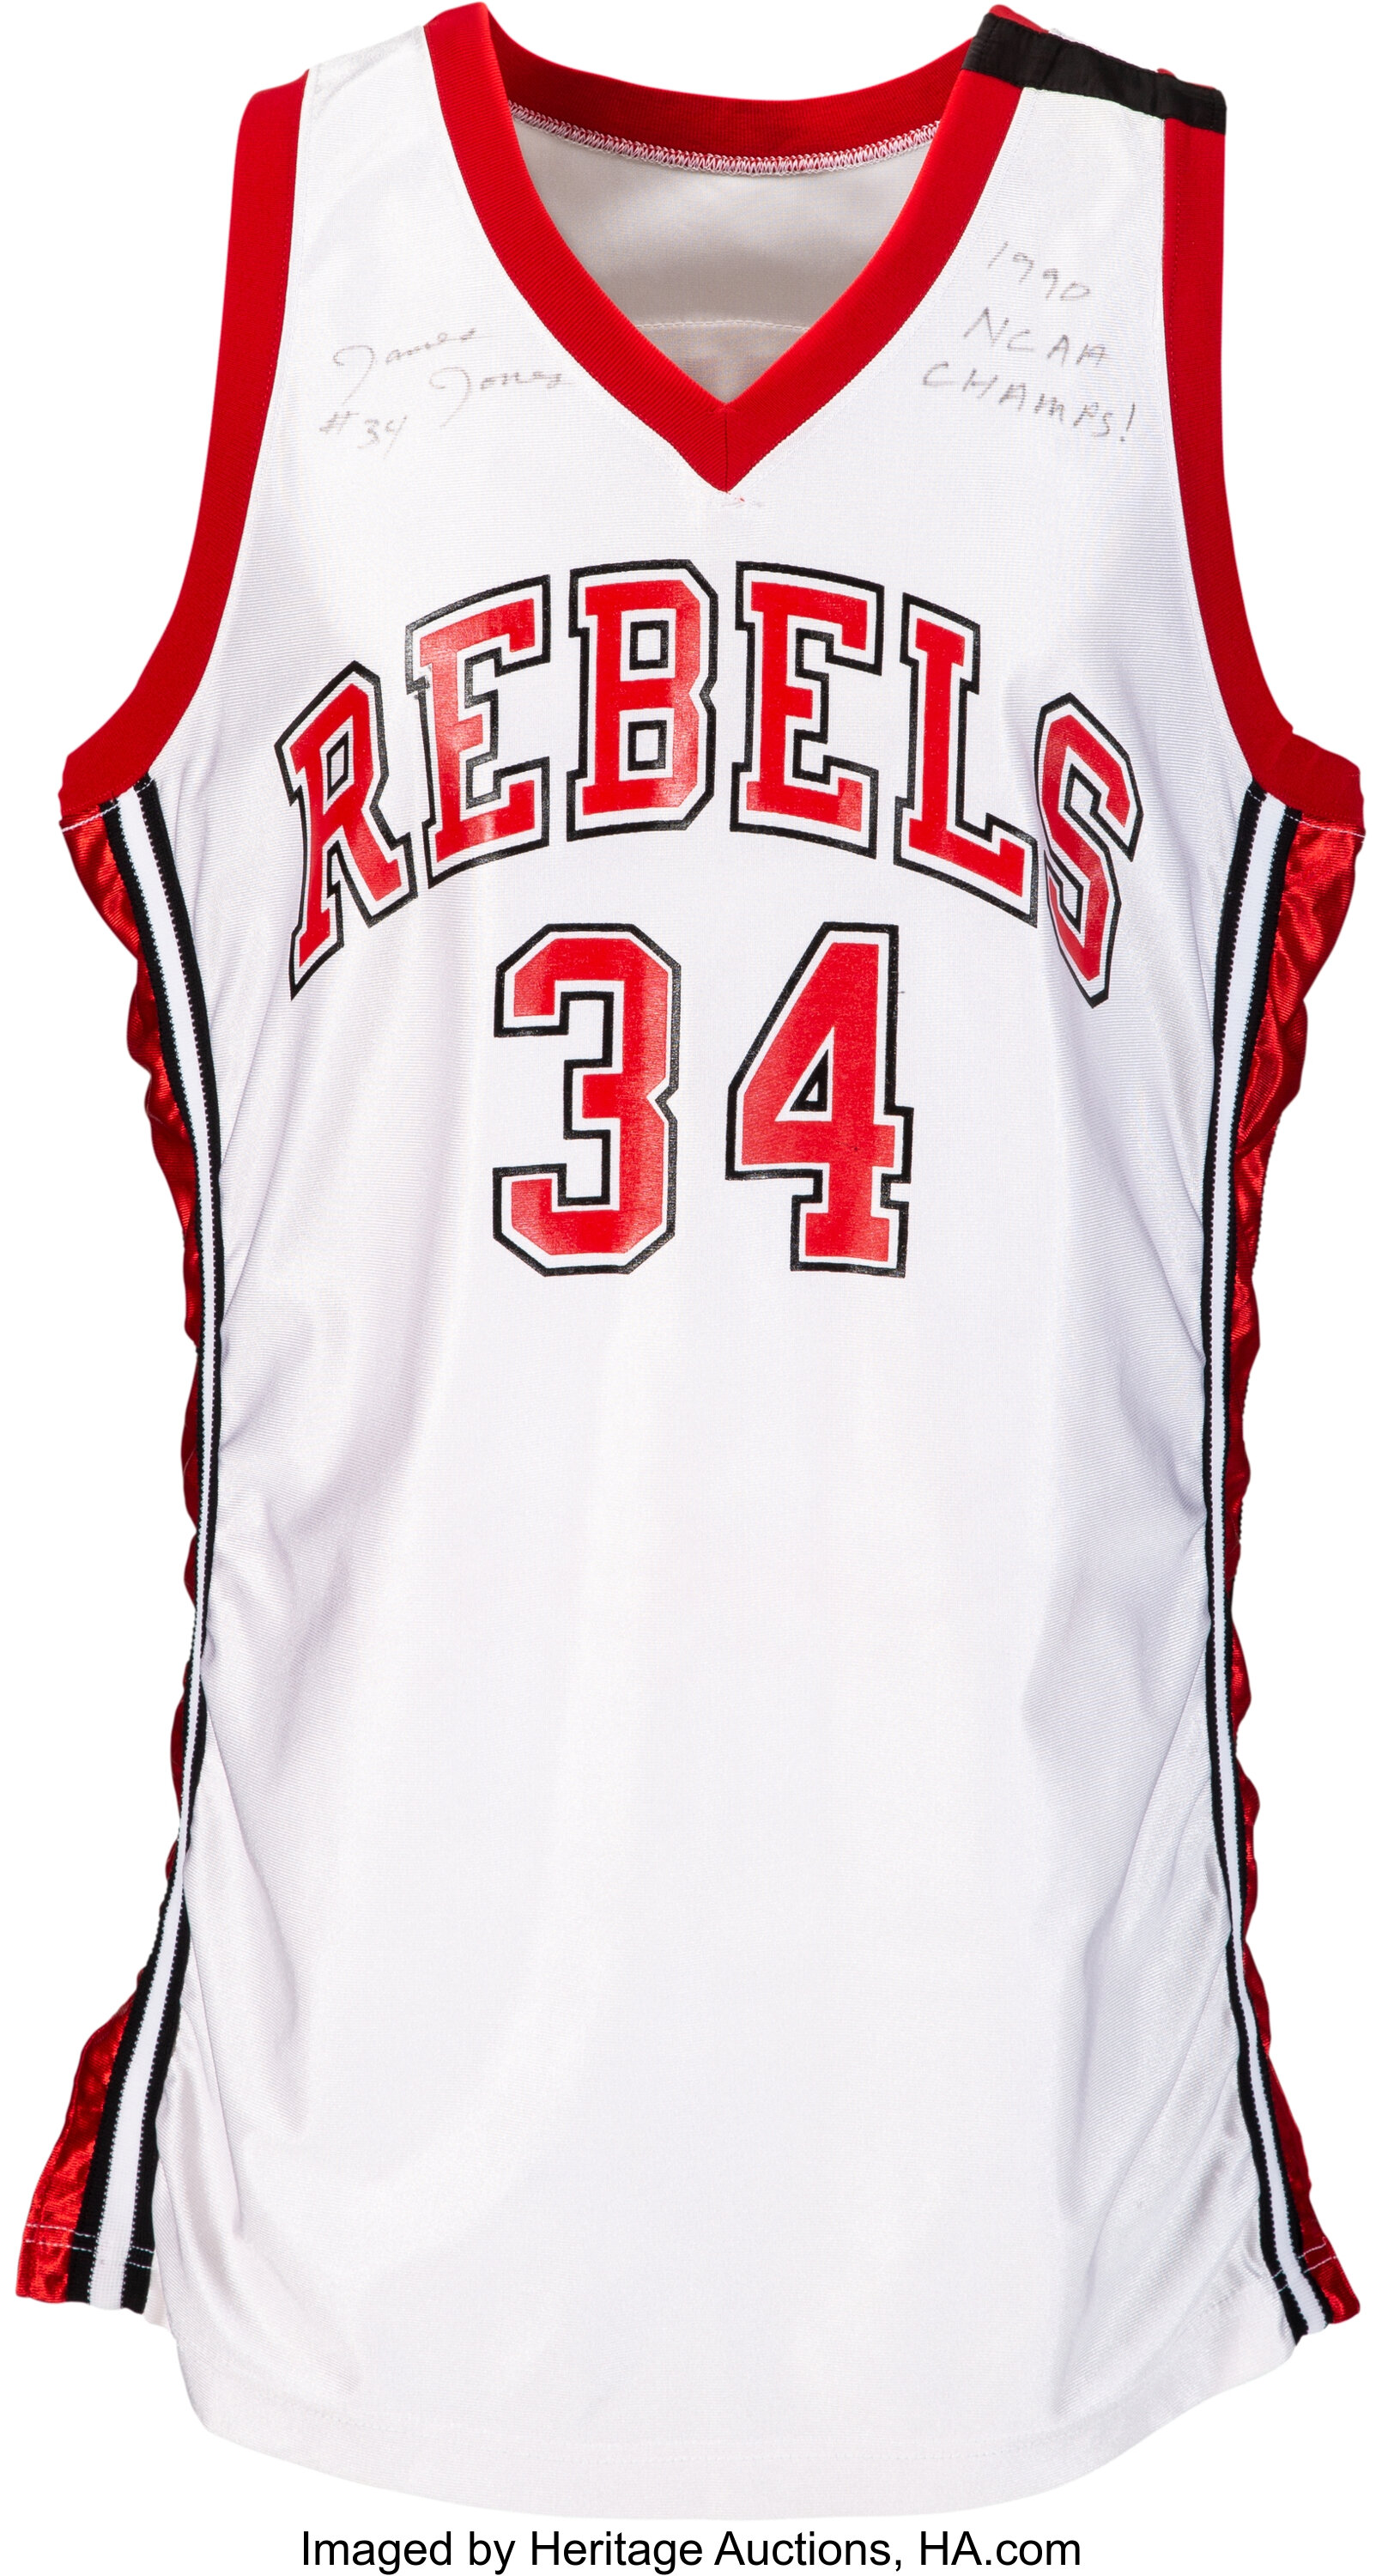 Rebellion Unisex Away Basketball Jersey — The Rebellion